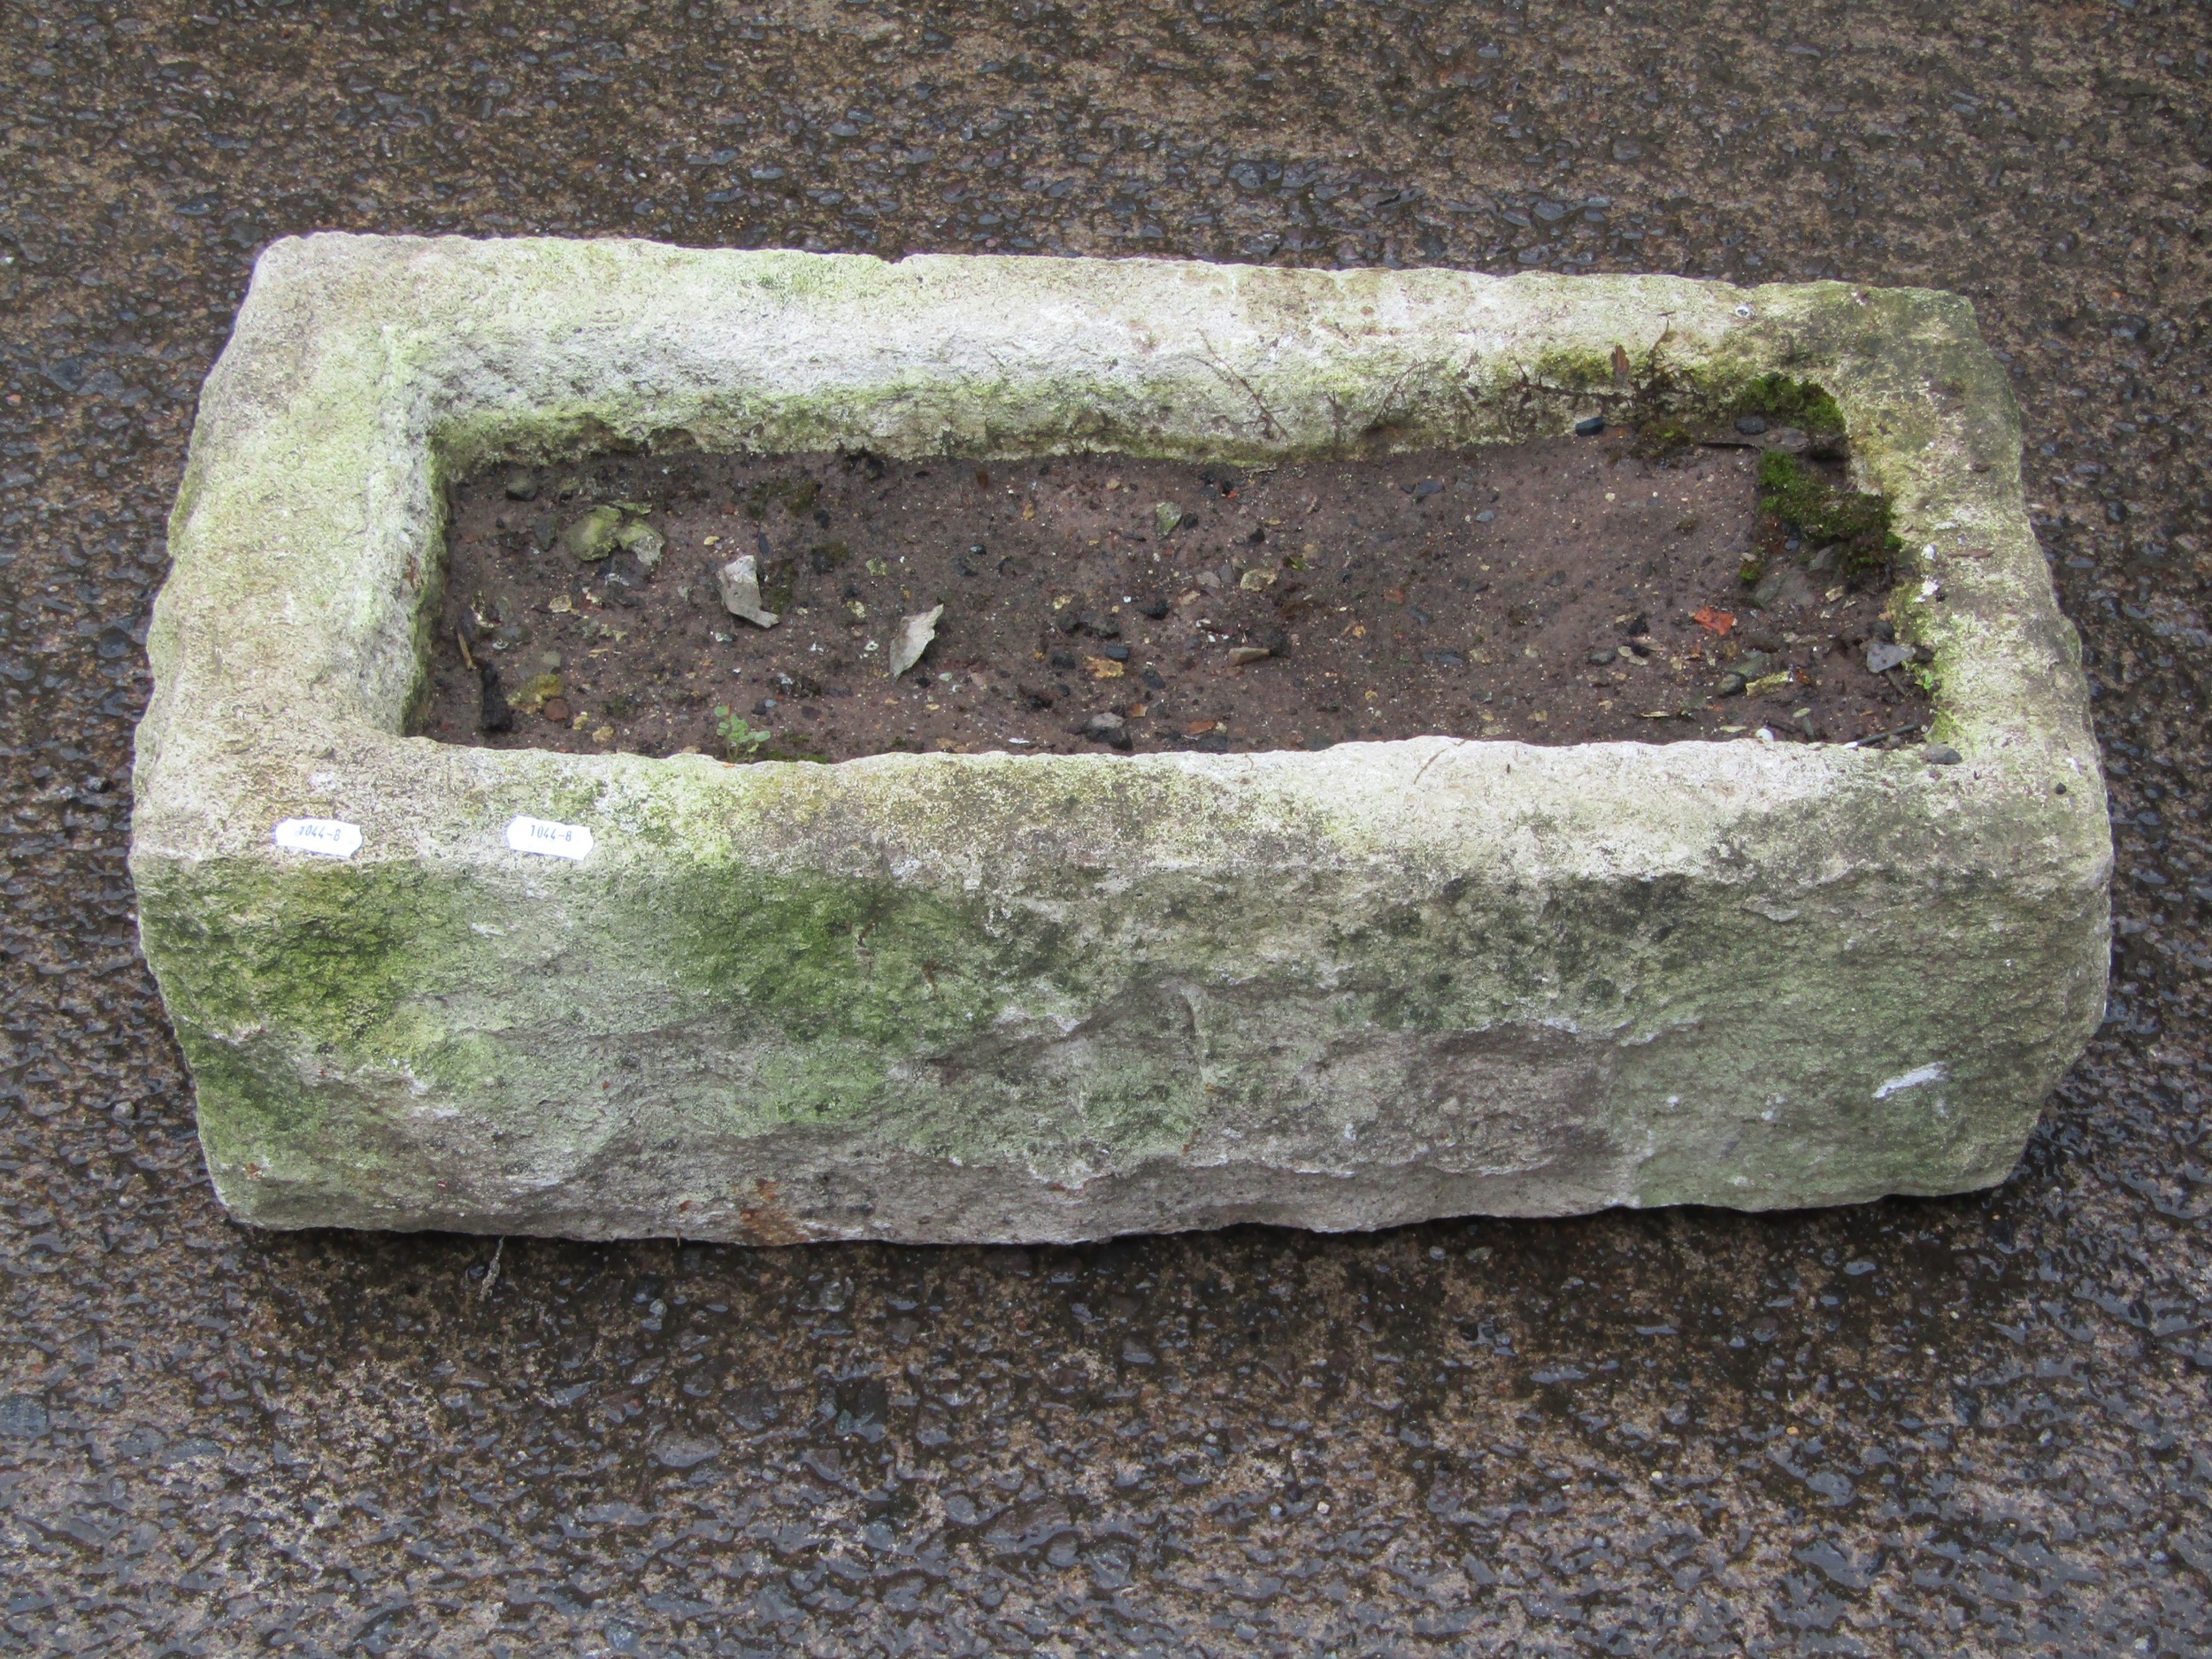 A weathered rough hewn rectangular natural stone trough 20 cm high x 64 cm long x 33 cm wide